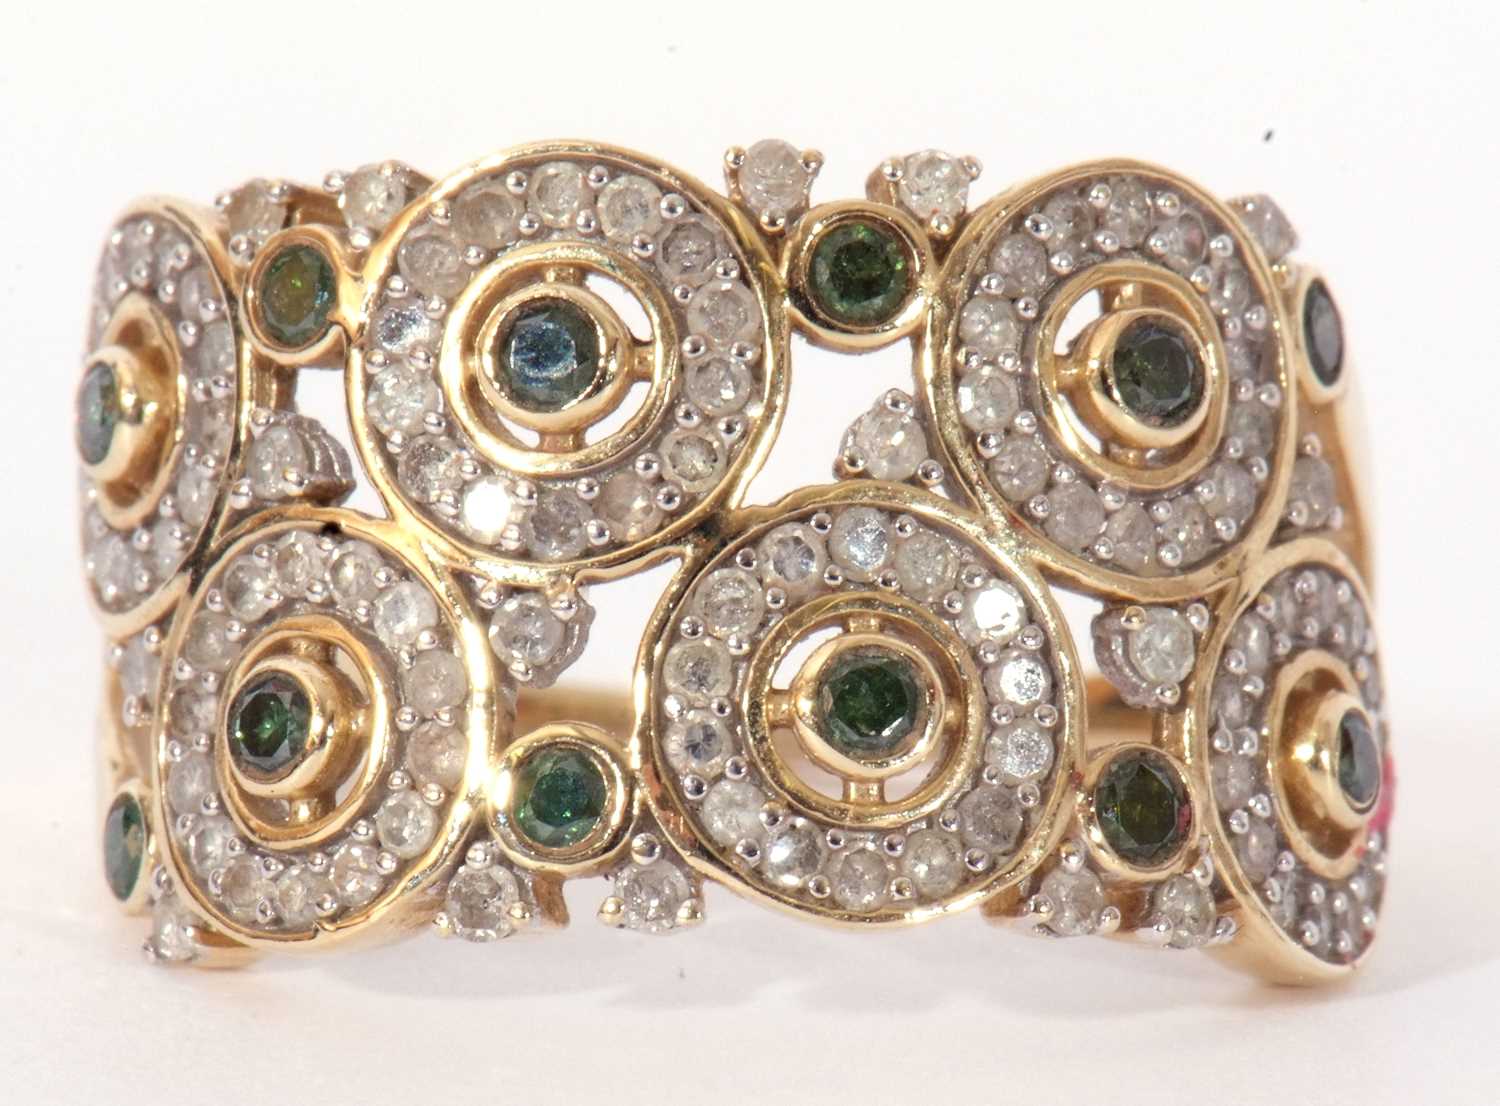 Modern 9ct gold, diamond and green stone set ring, a design featuring six small diamond set discs